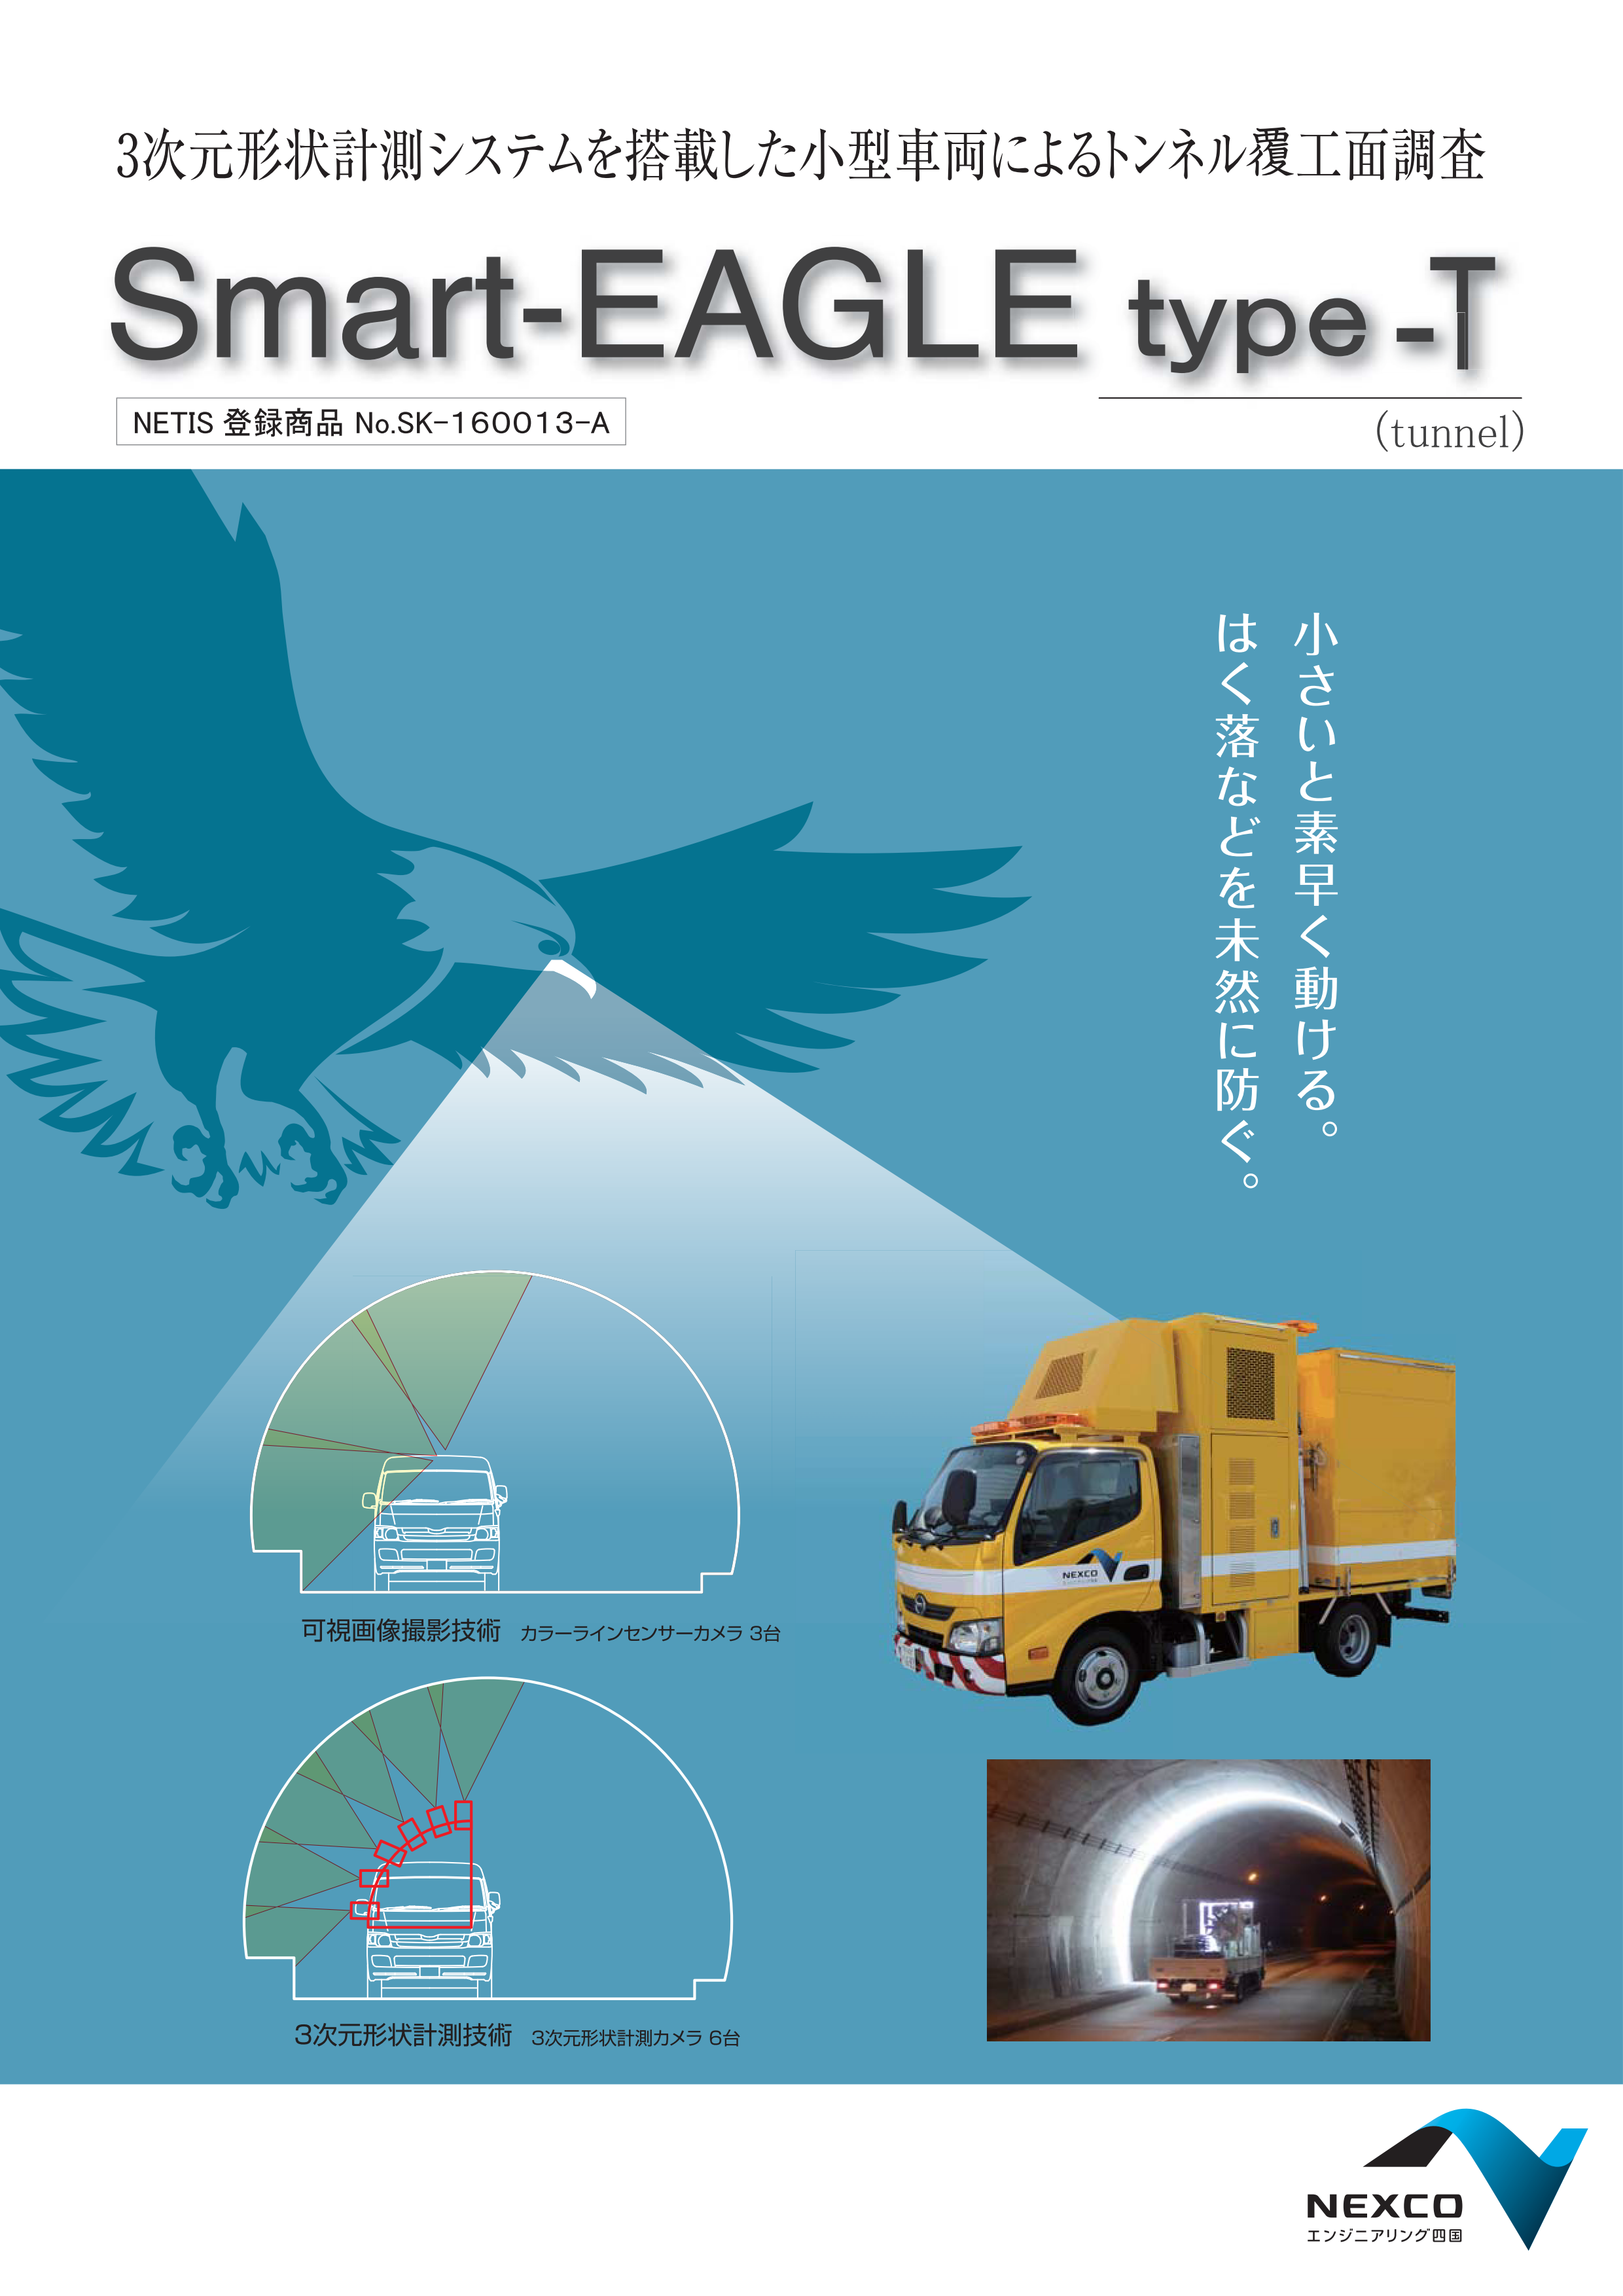 Smart-EAGLE type-T（tunnel）のカタログ表紙